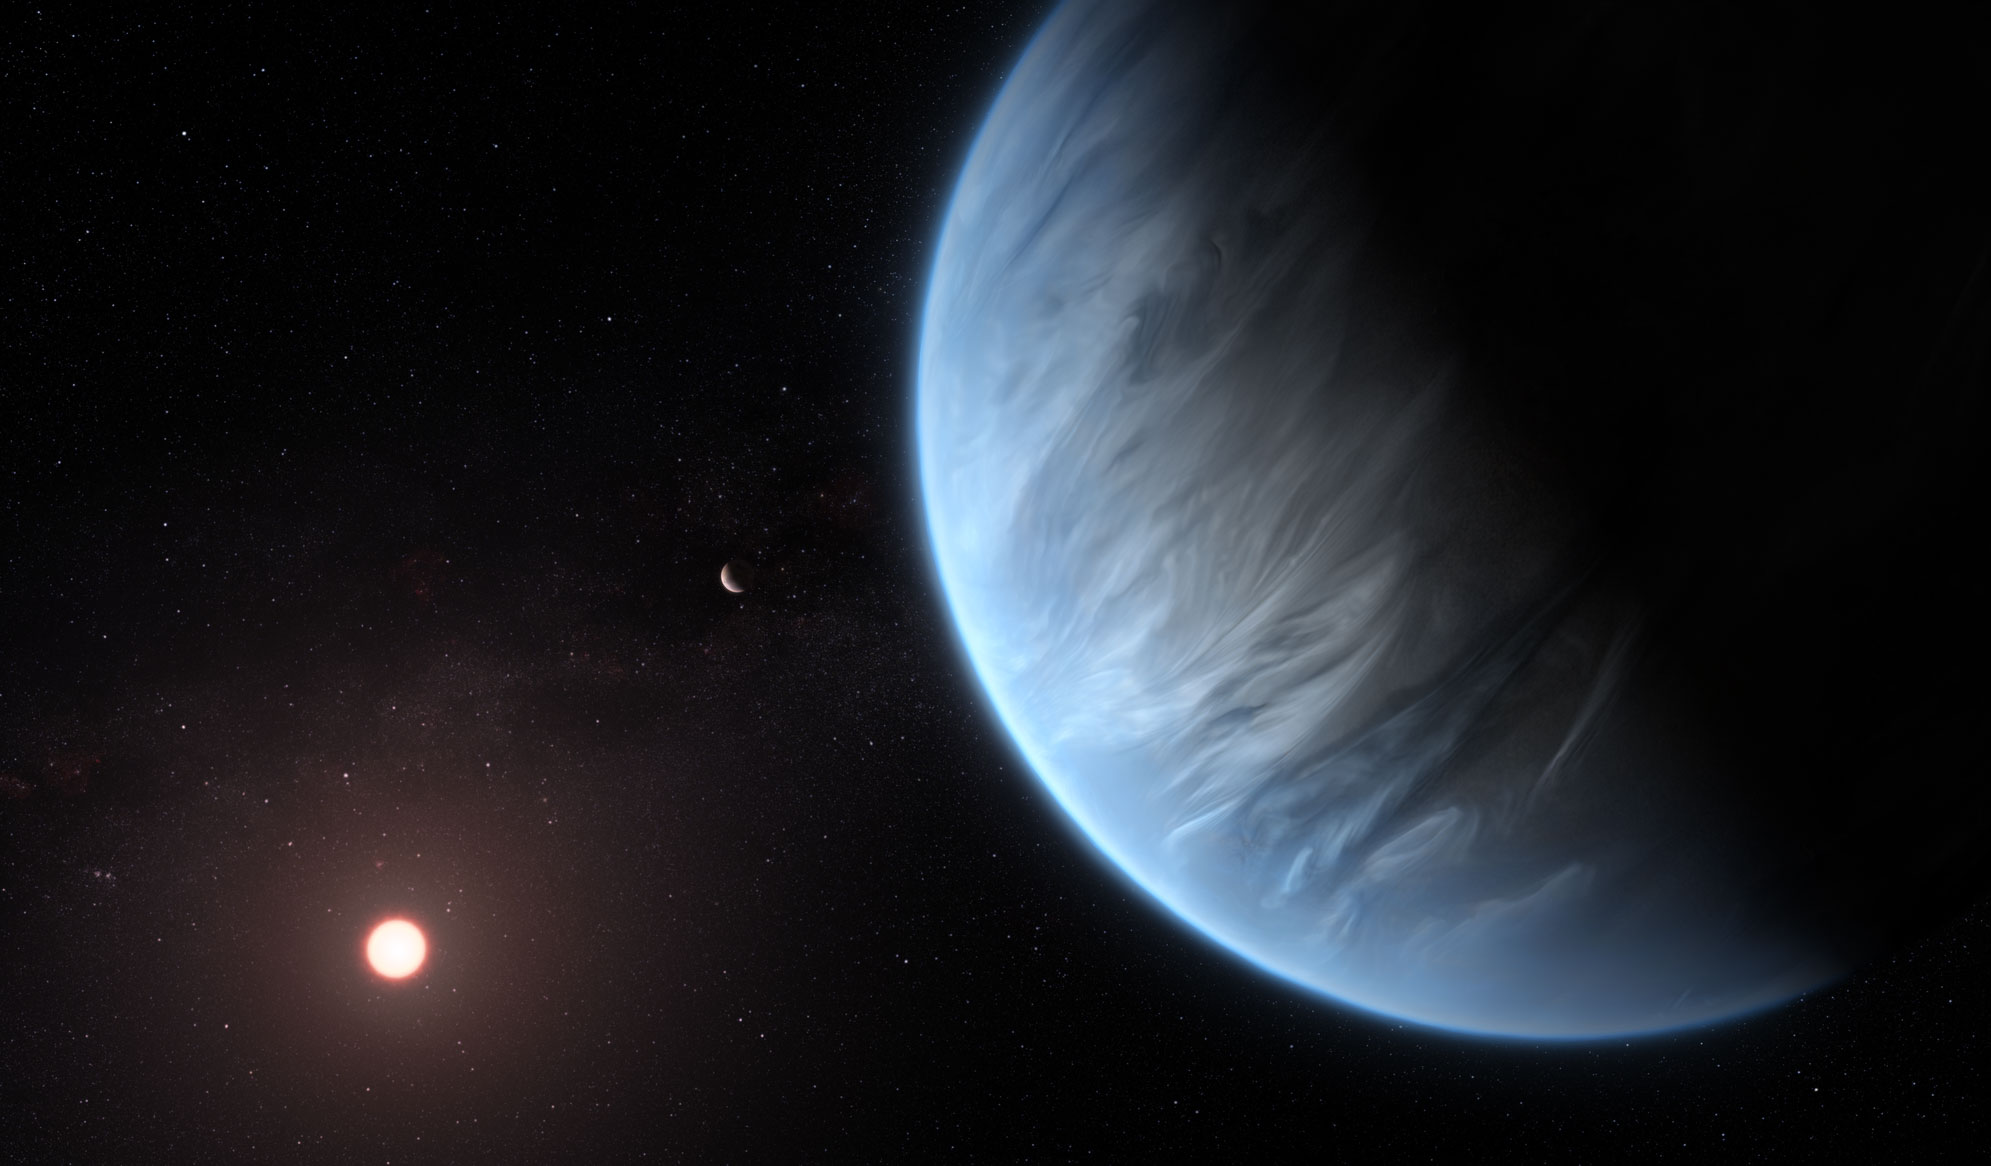 Artist impression of planet K2-18b